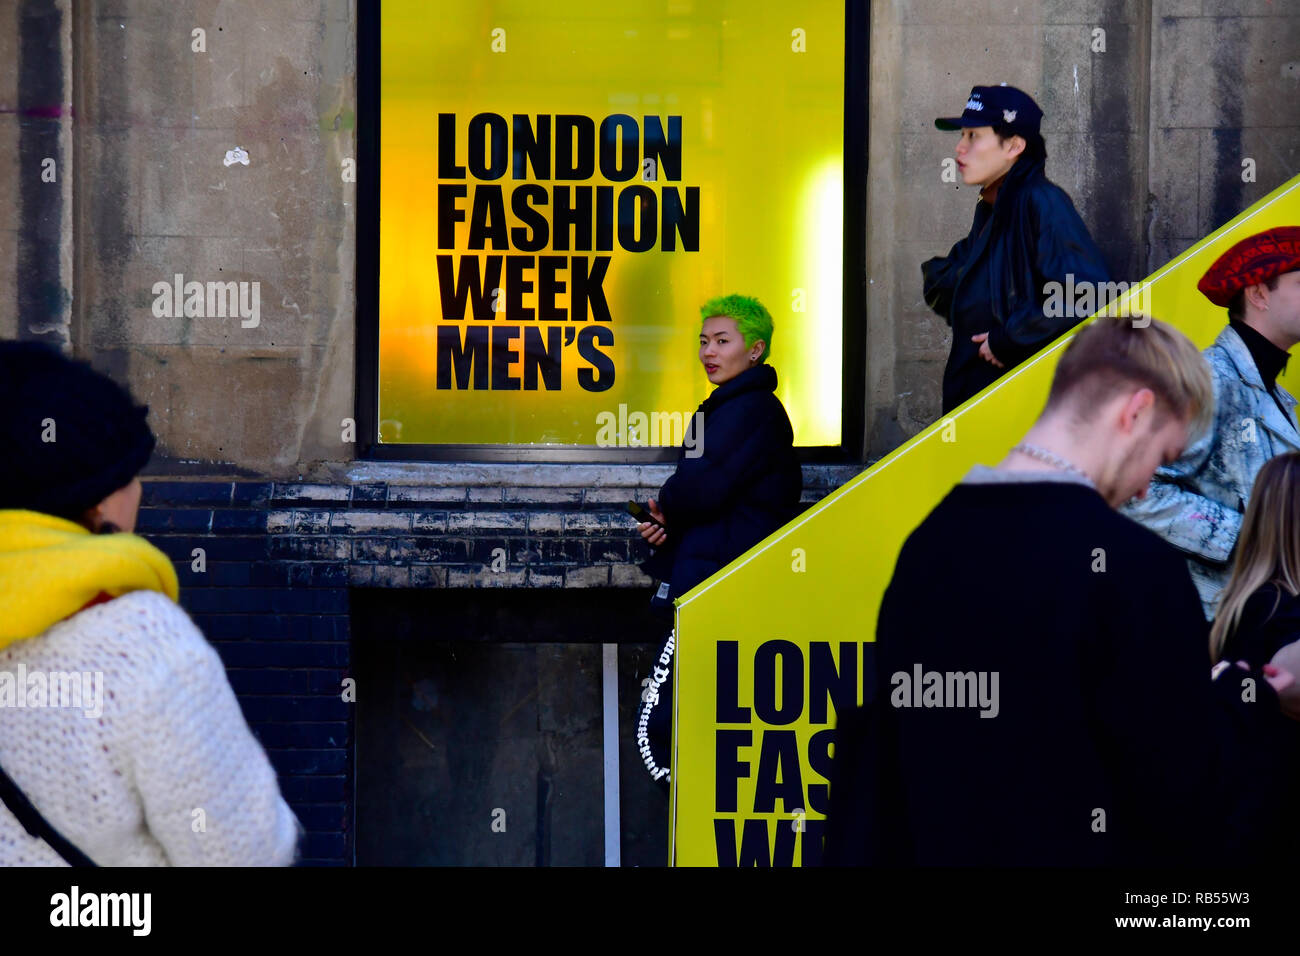 London fashion week men's, London, Uk Stock Photo